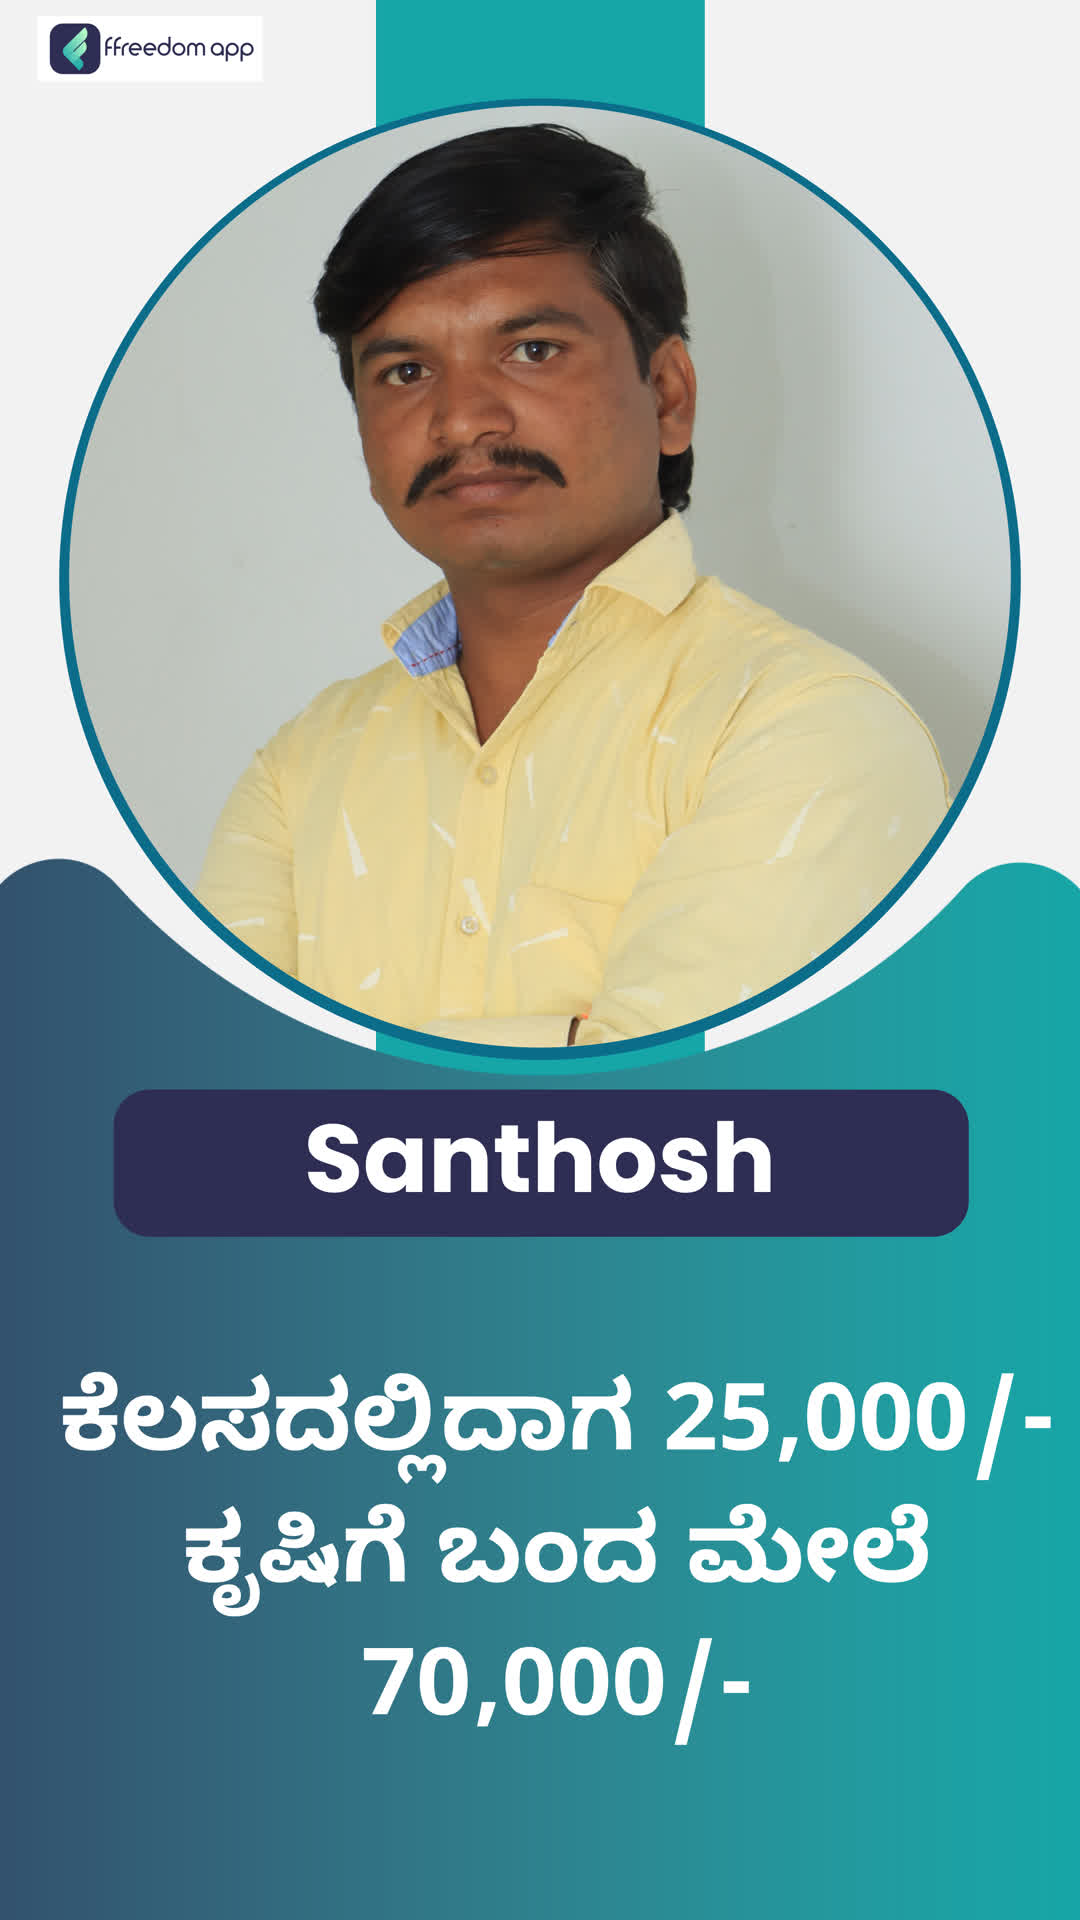 santosh's Honest Review of ffreedom app - Vijayapura ,Karnataka